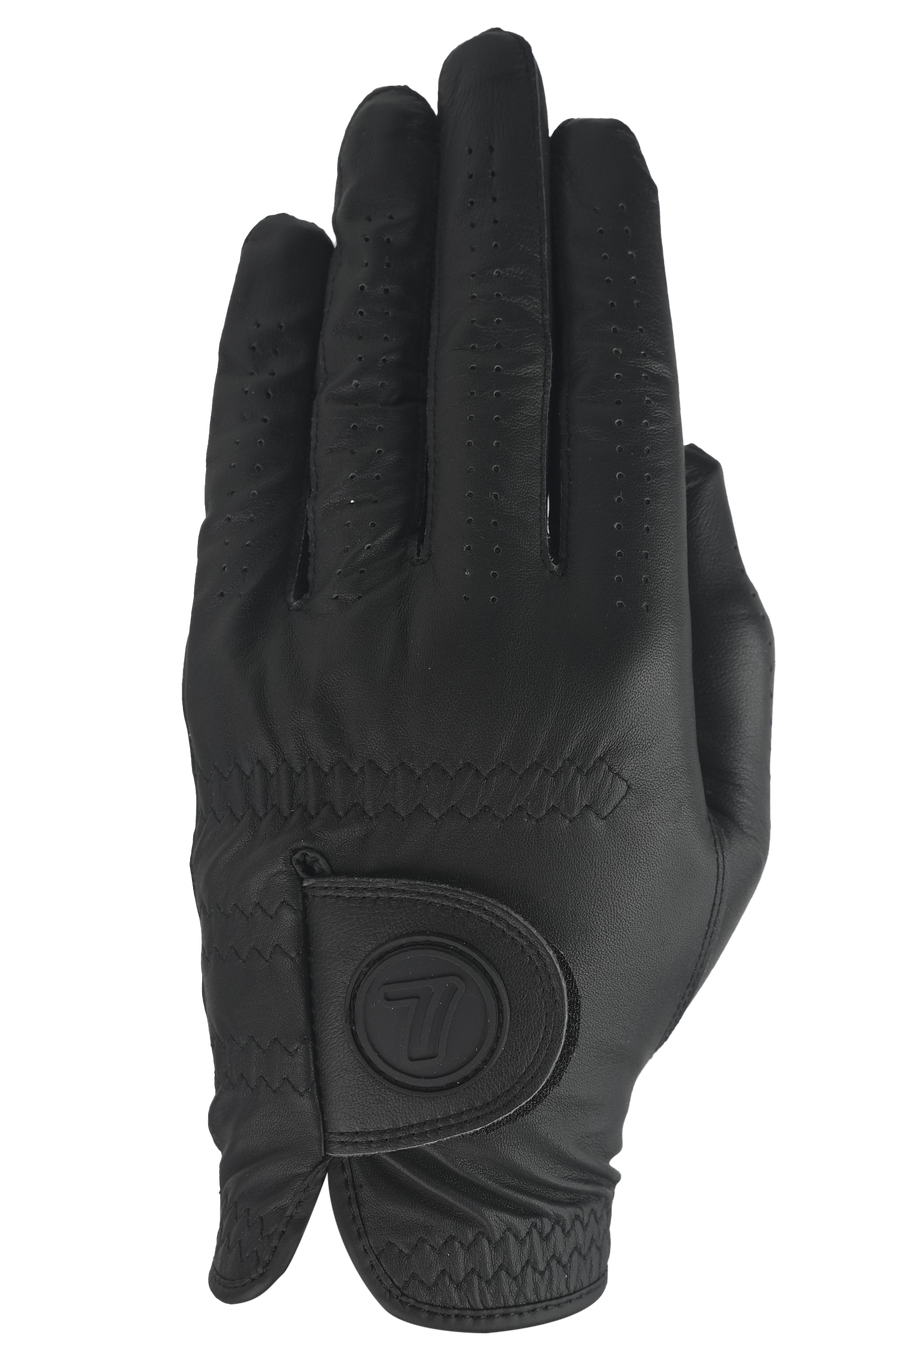 Tour One Pro Glove (Black)